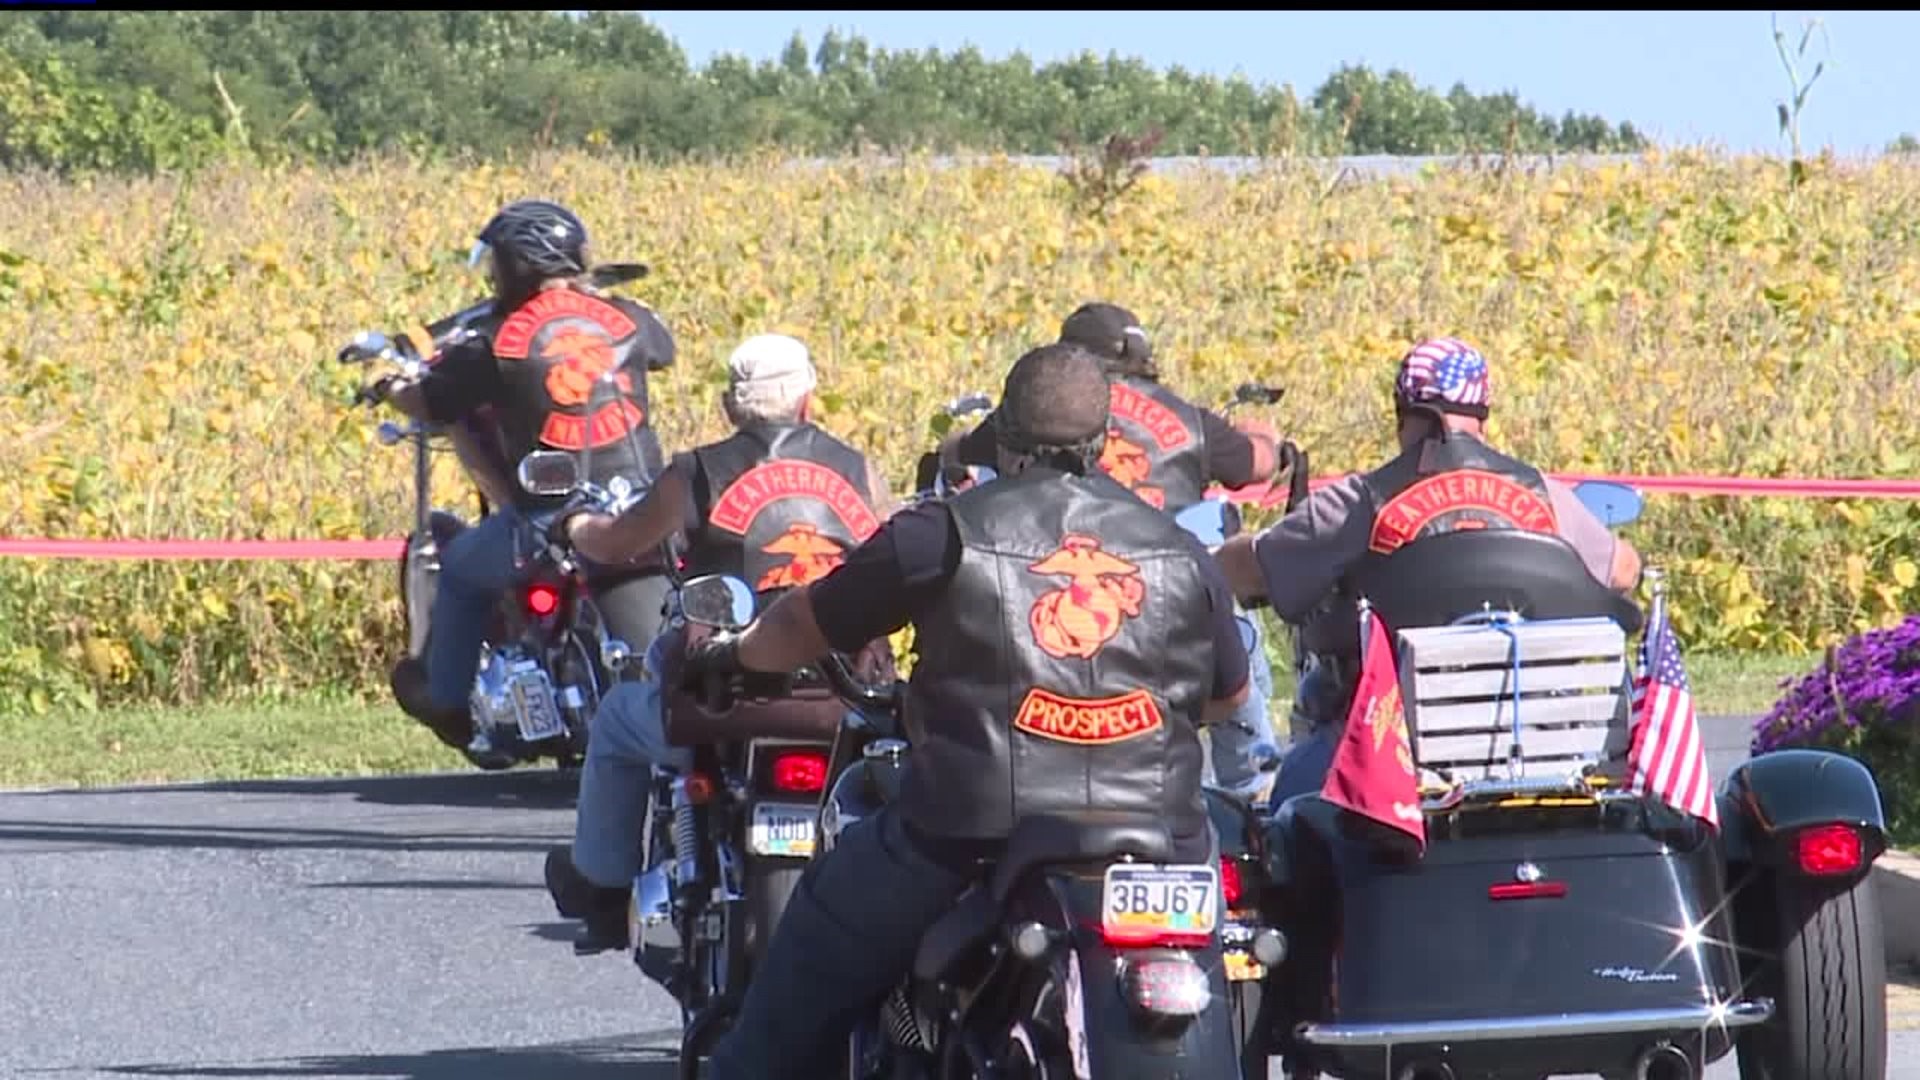 Motorcyclists help raise money for children of fallen heroes in Lebanon County